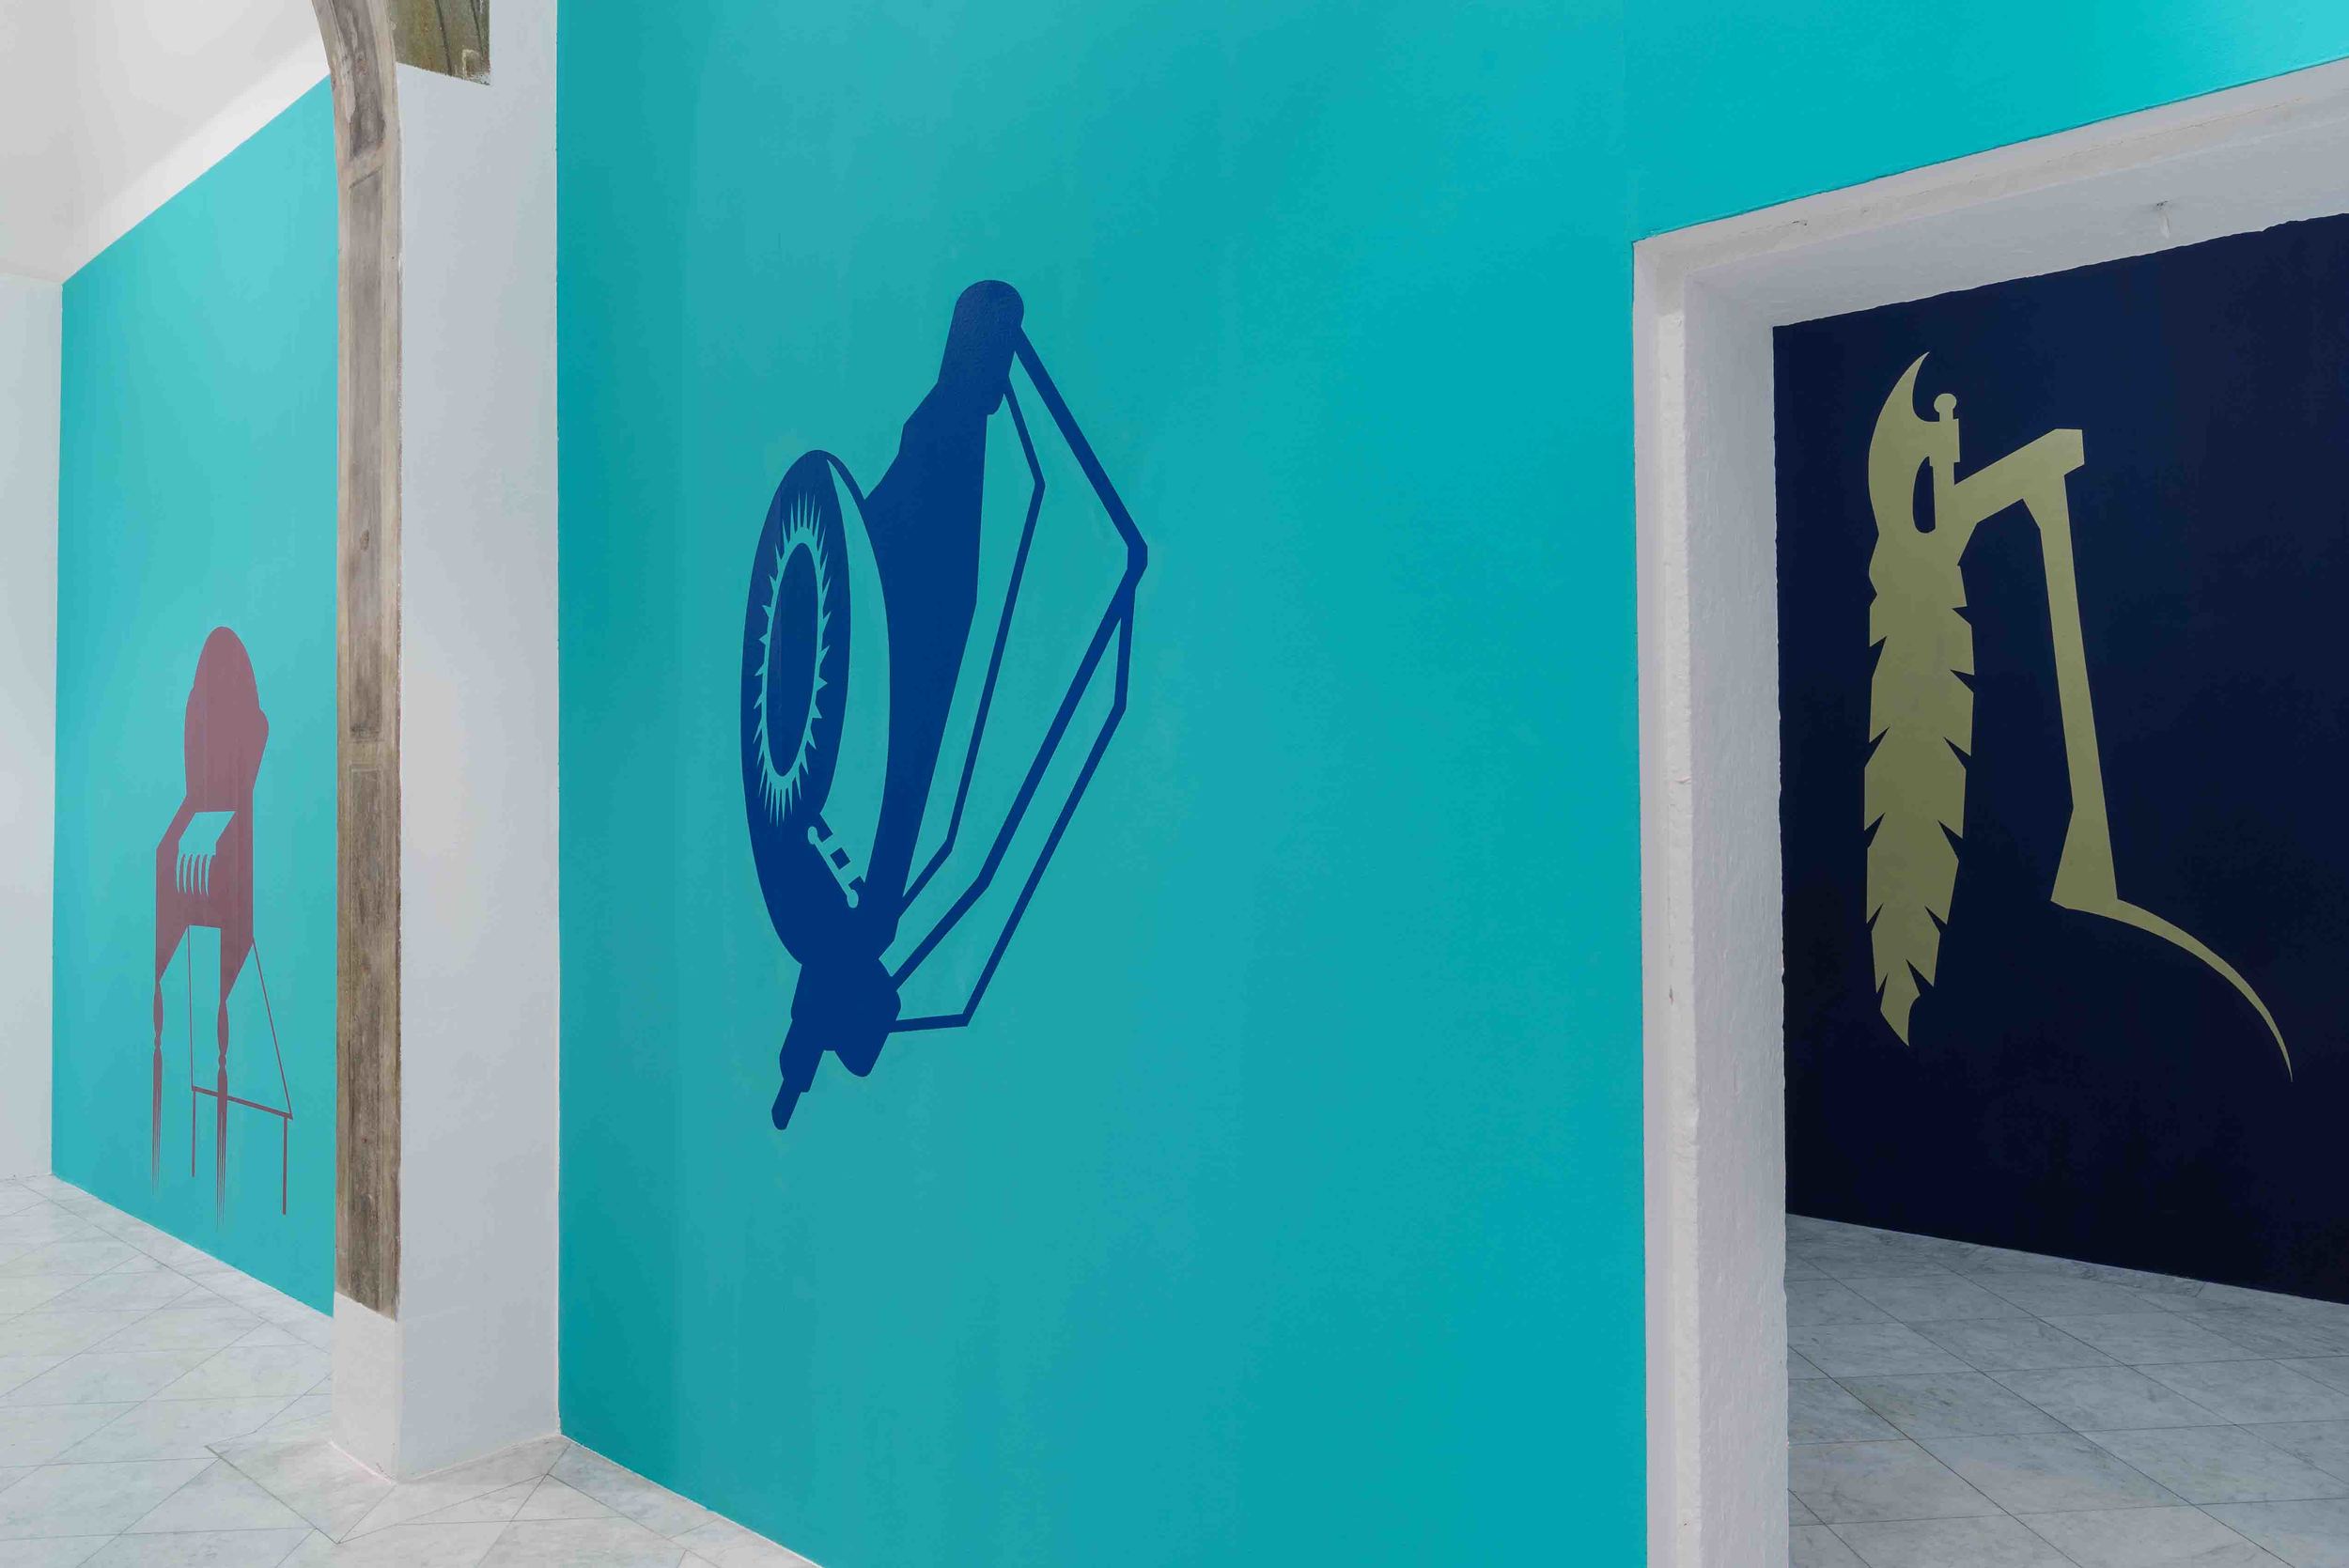   Mona Marzouk, Renovabitvr, acrylic colors, 2015. Installation view at Villa Romana. Photo credit:&nbsp;  Elzbieta Bialkowska.  